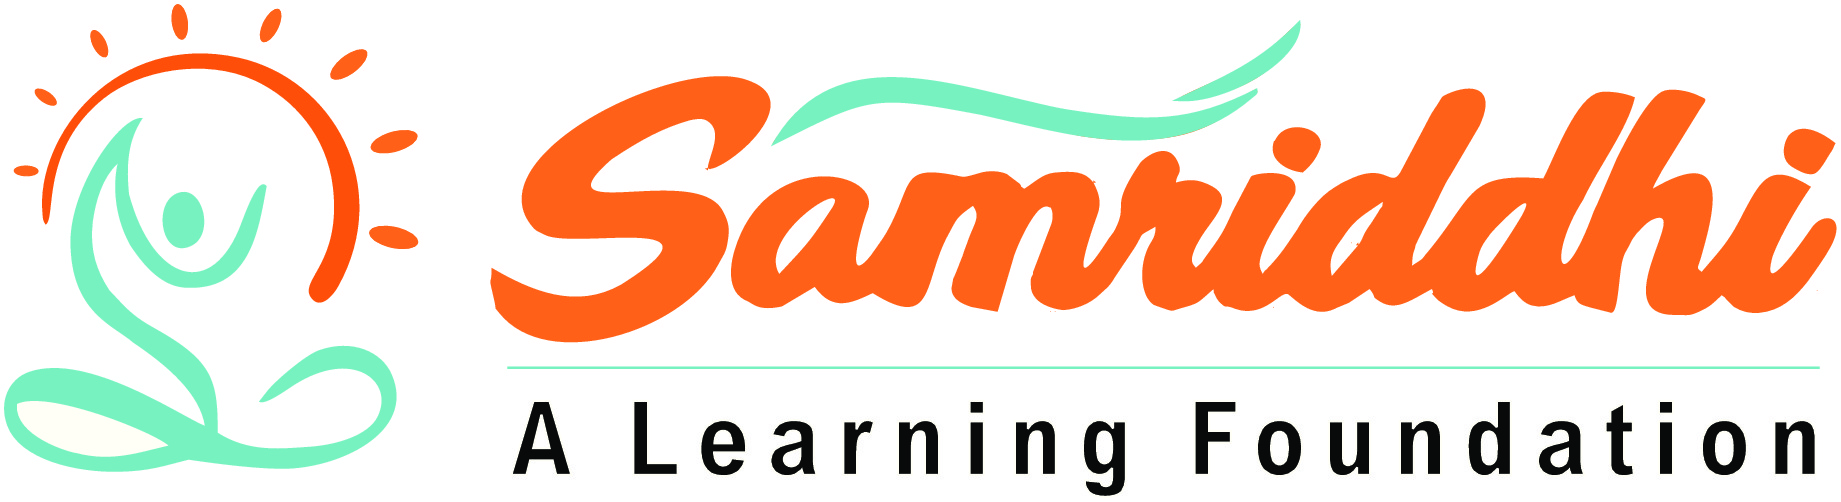 Samriddhi A Learning Foundation 